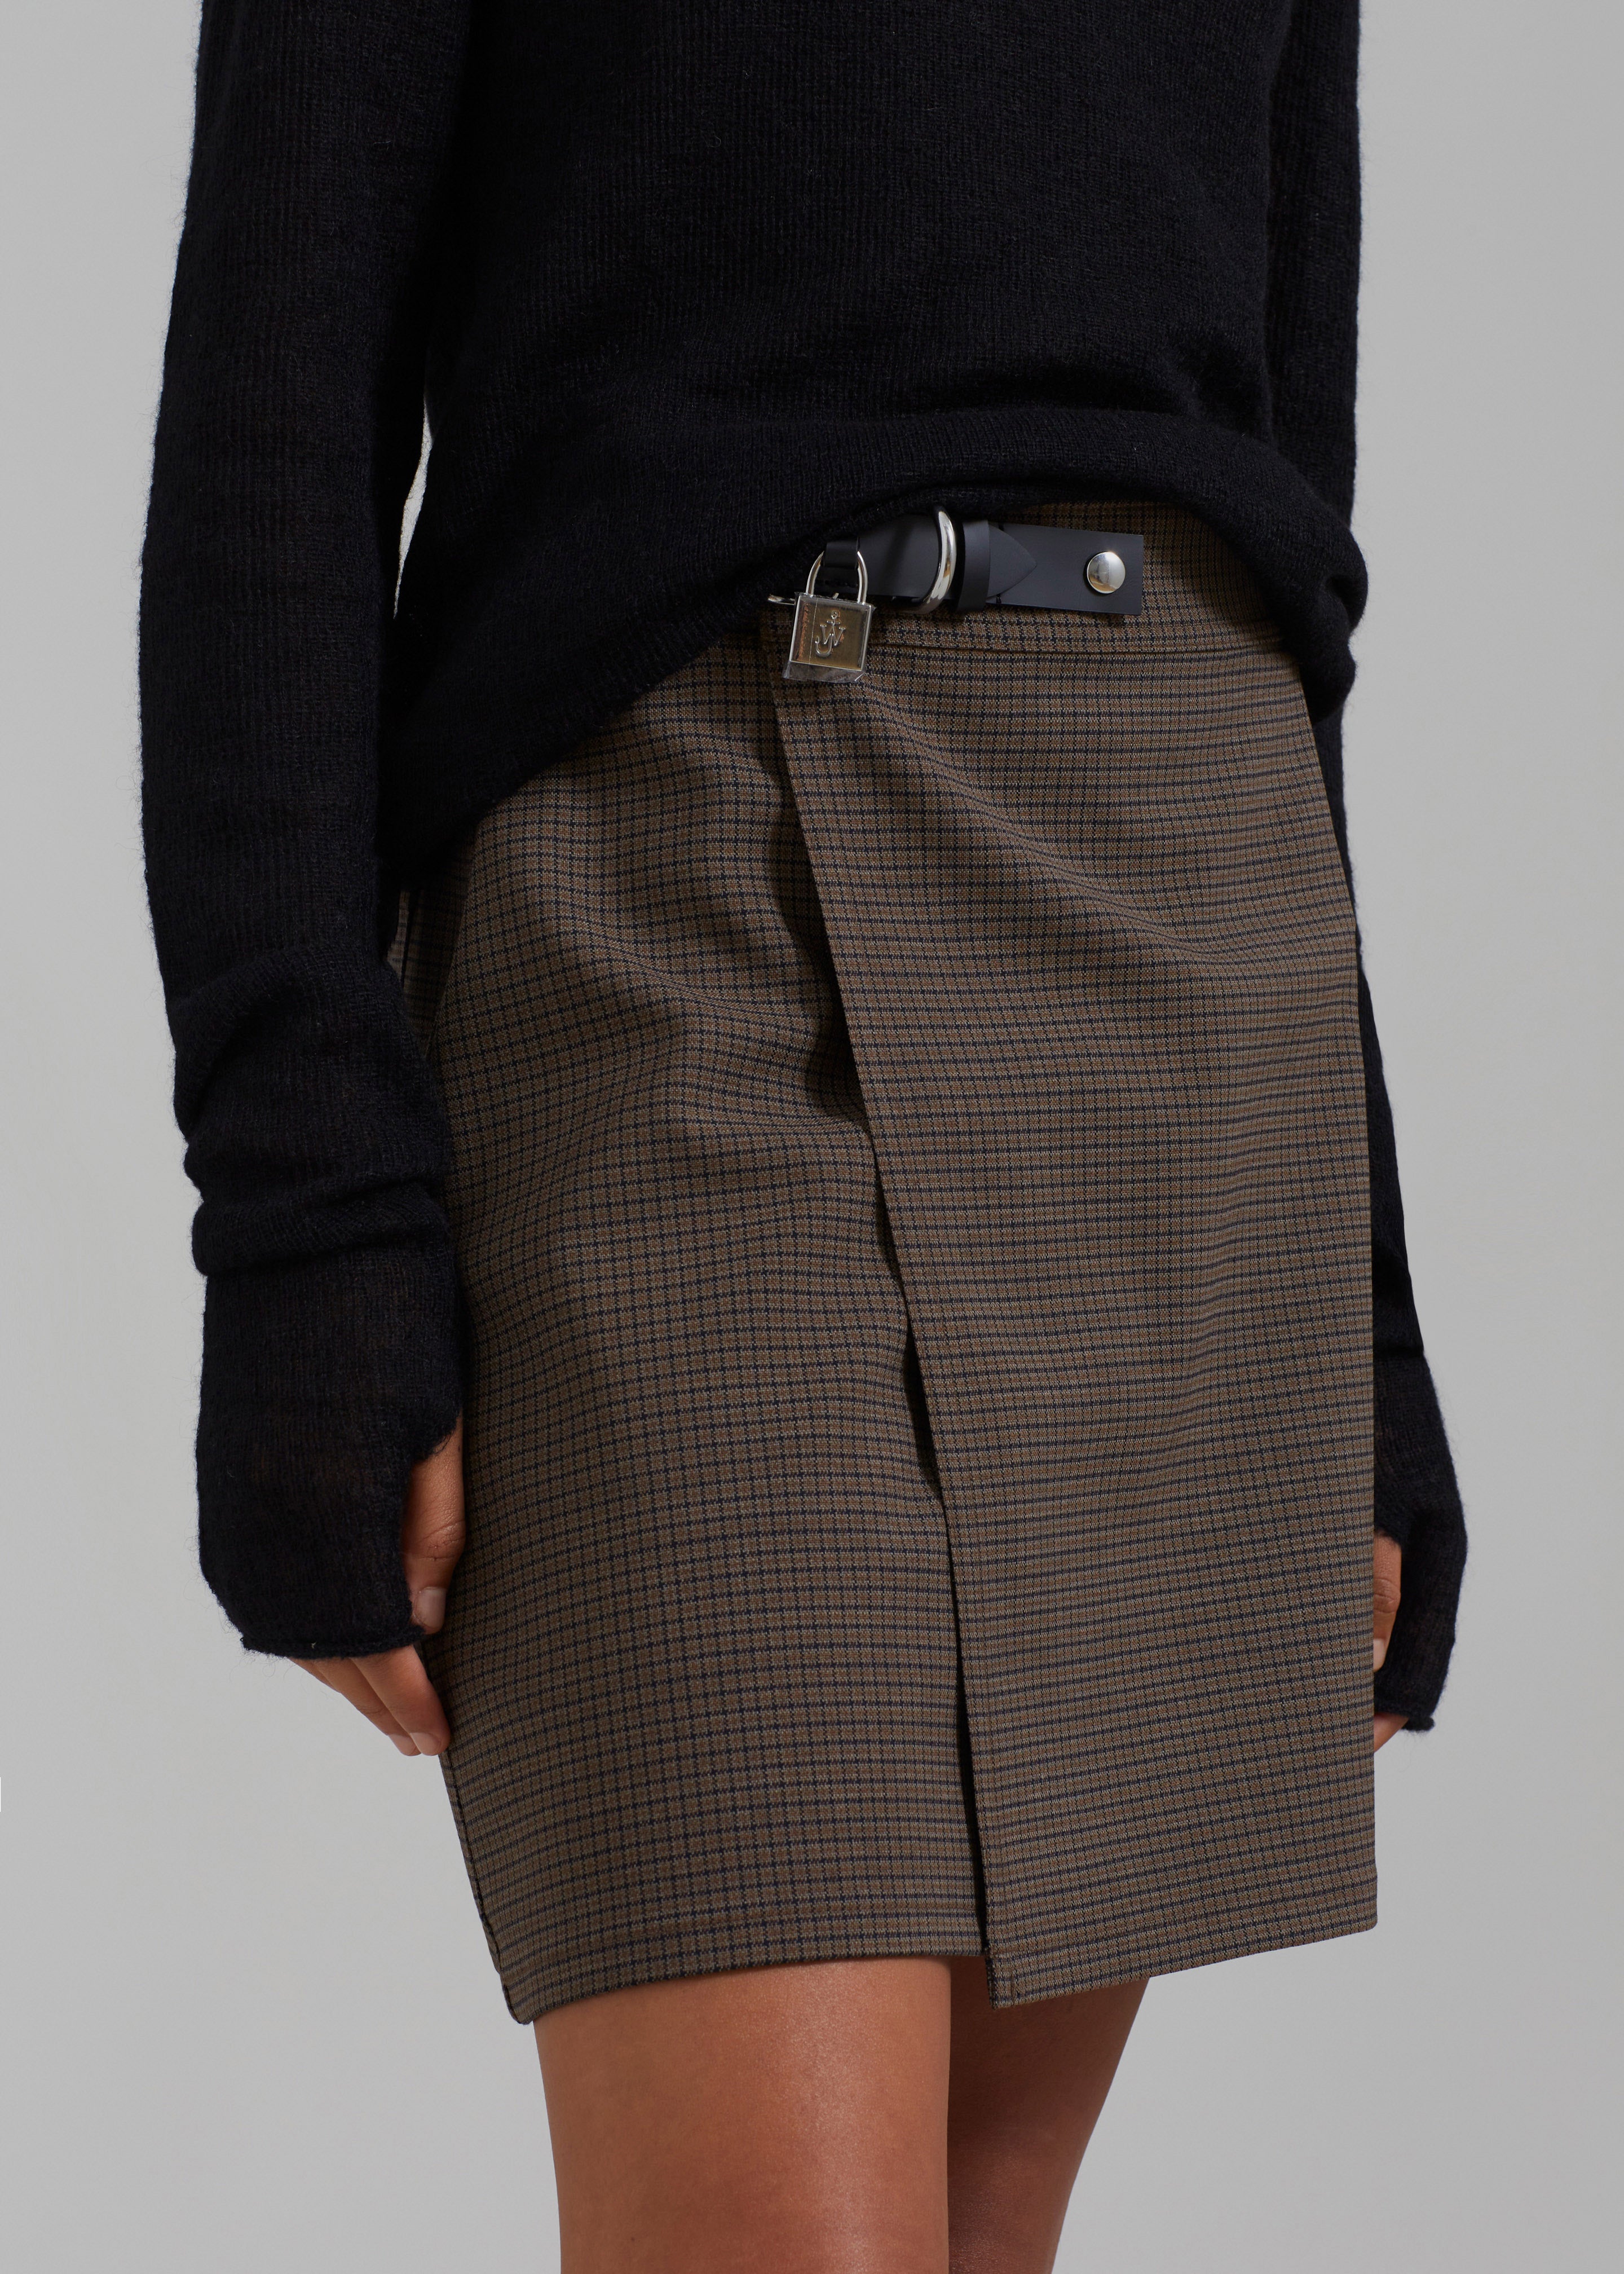 JW Anderson Padlock Strap Mini Skirt - Brown Sugar Comb - 4